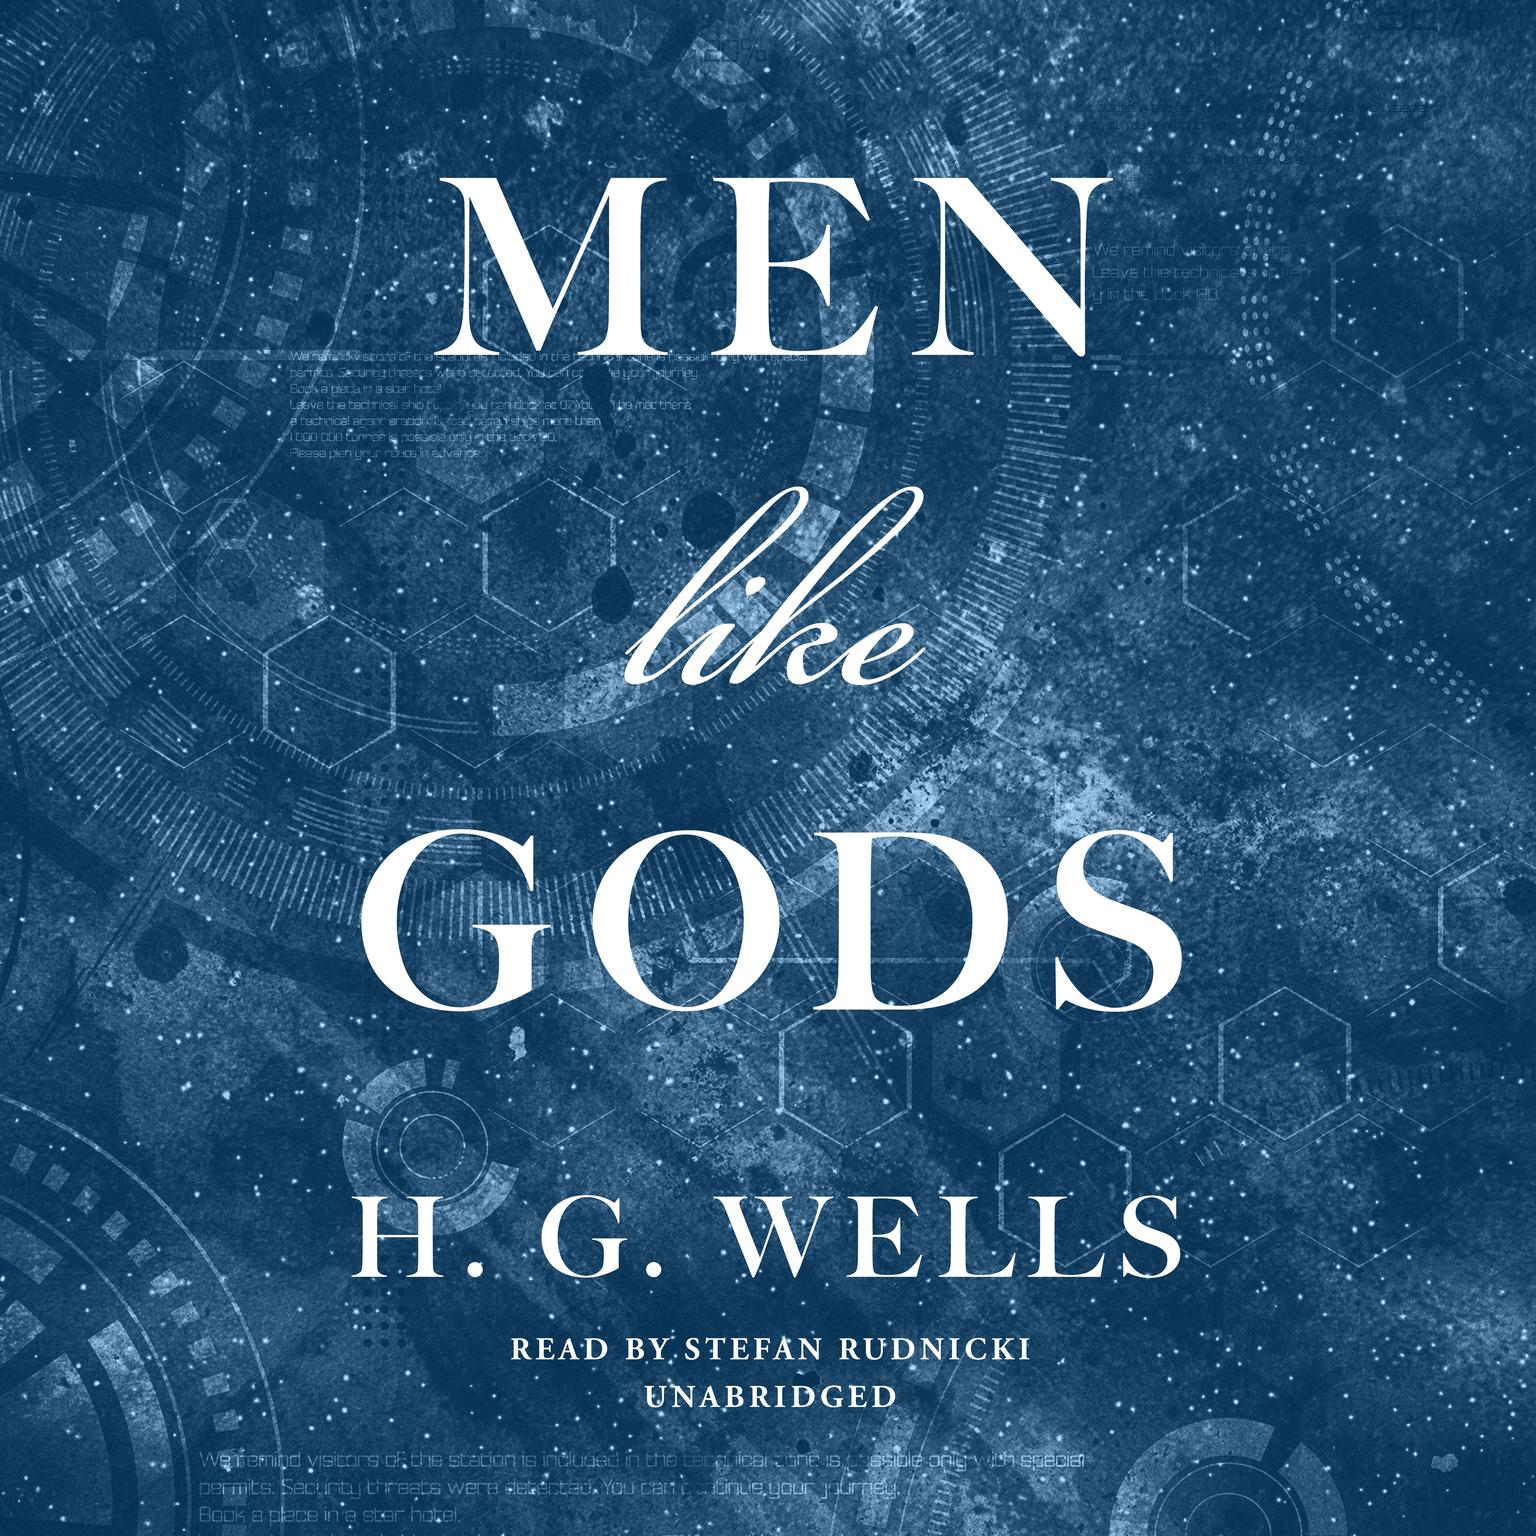 Men like Gods Audiobook, by H. G. Wells